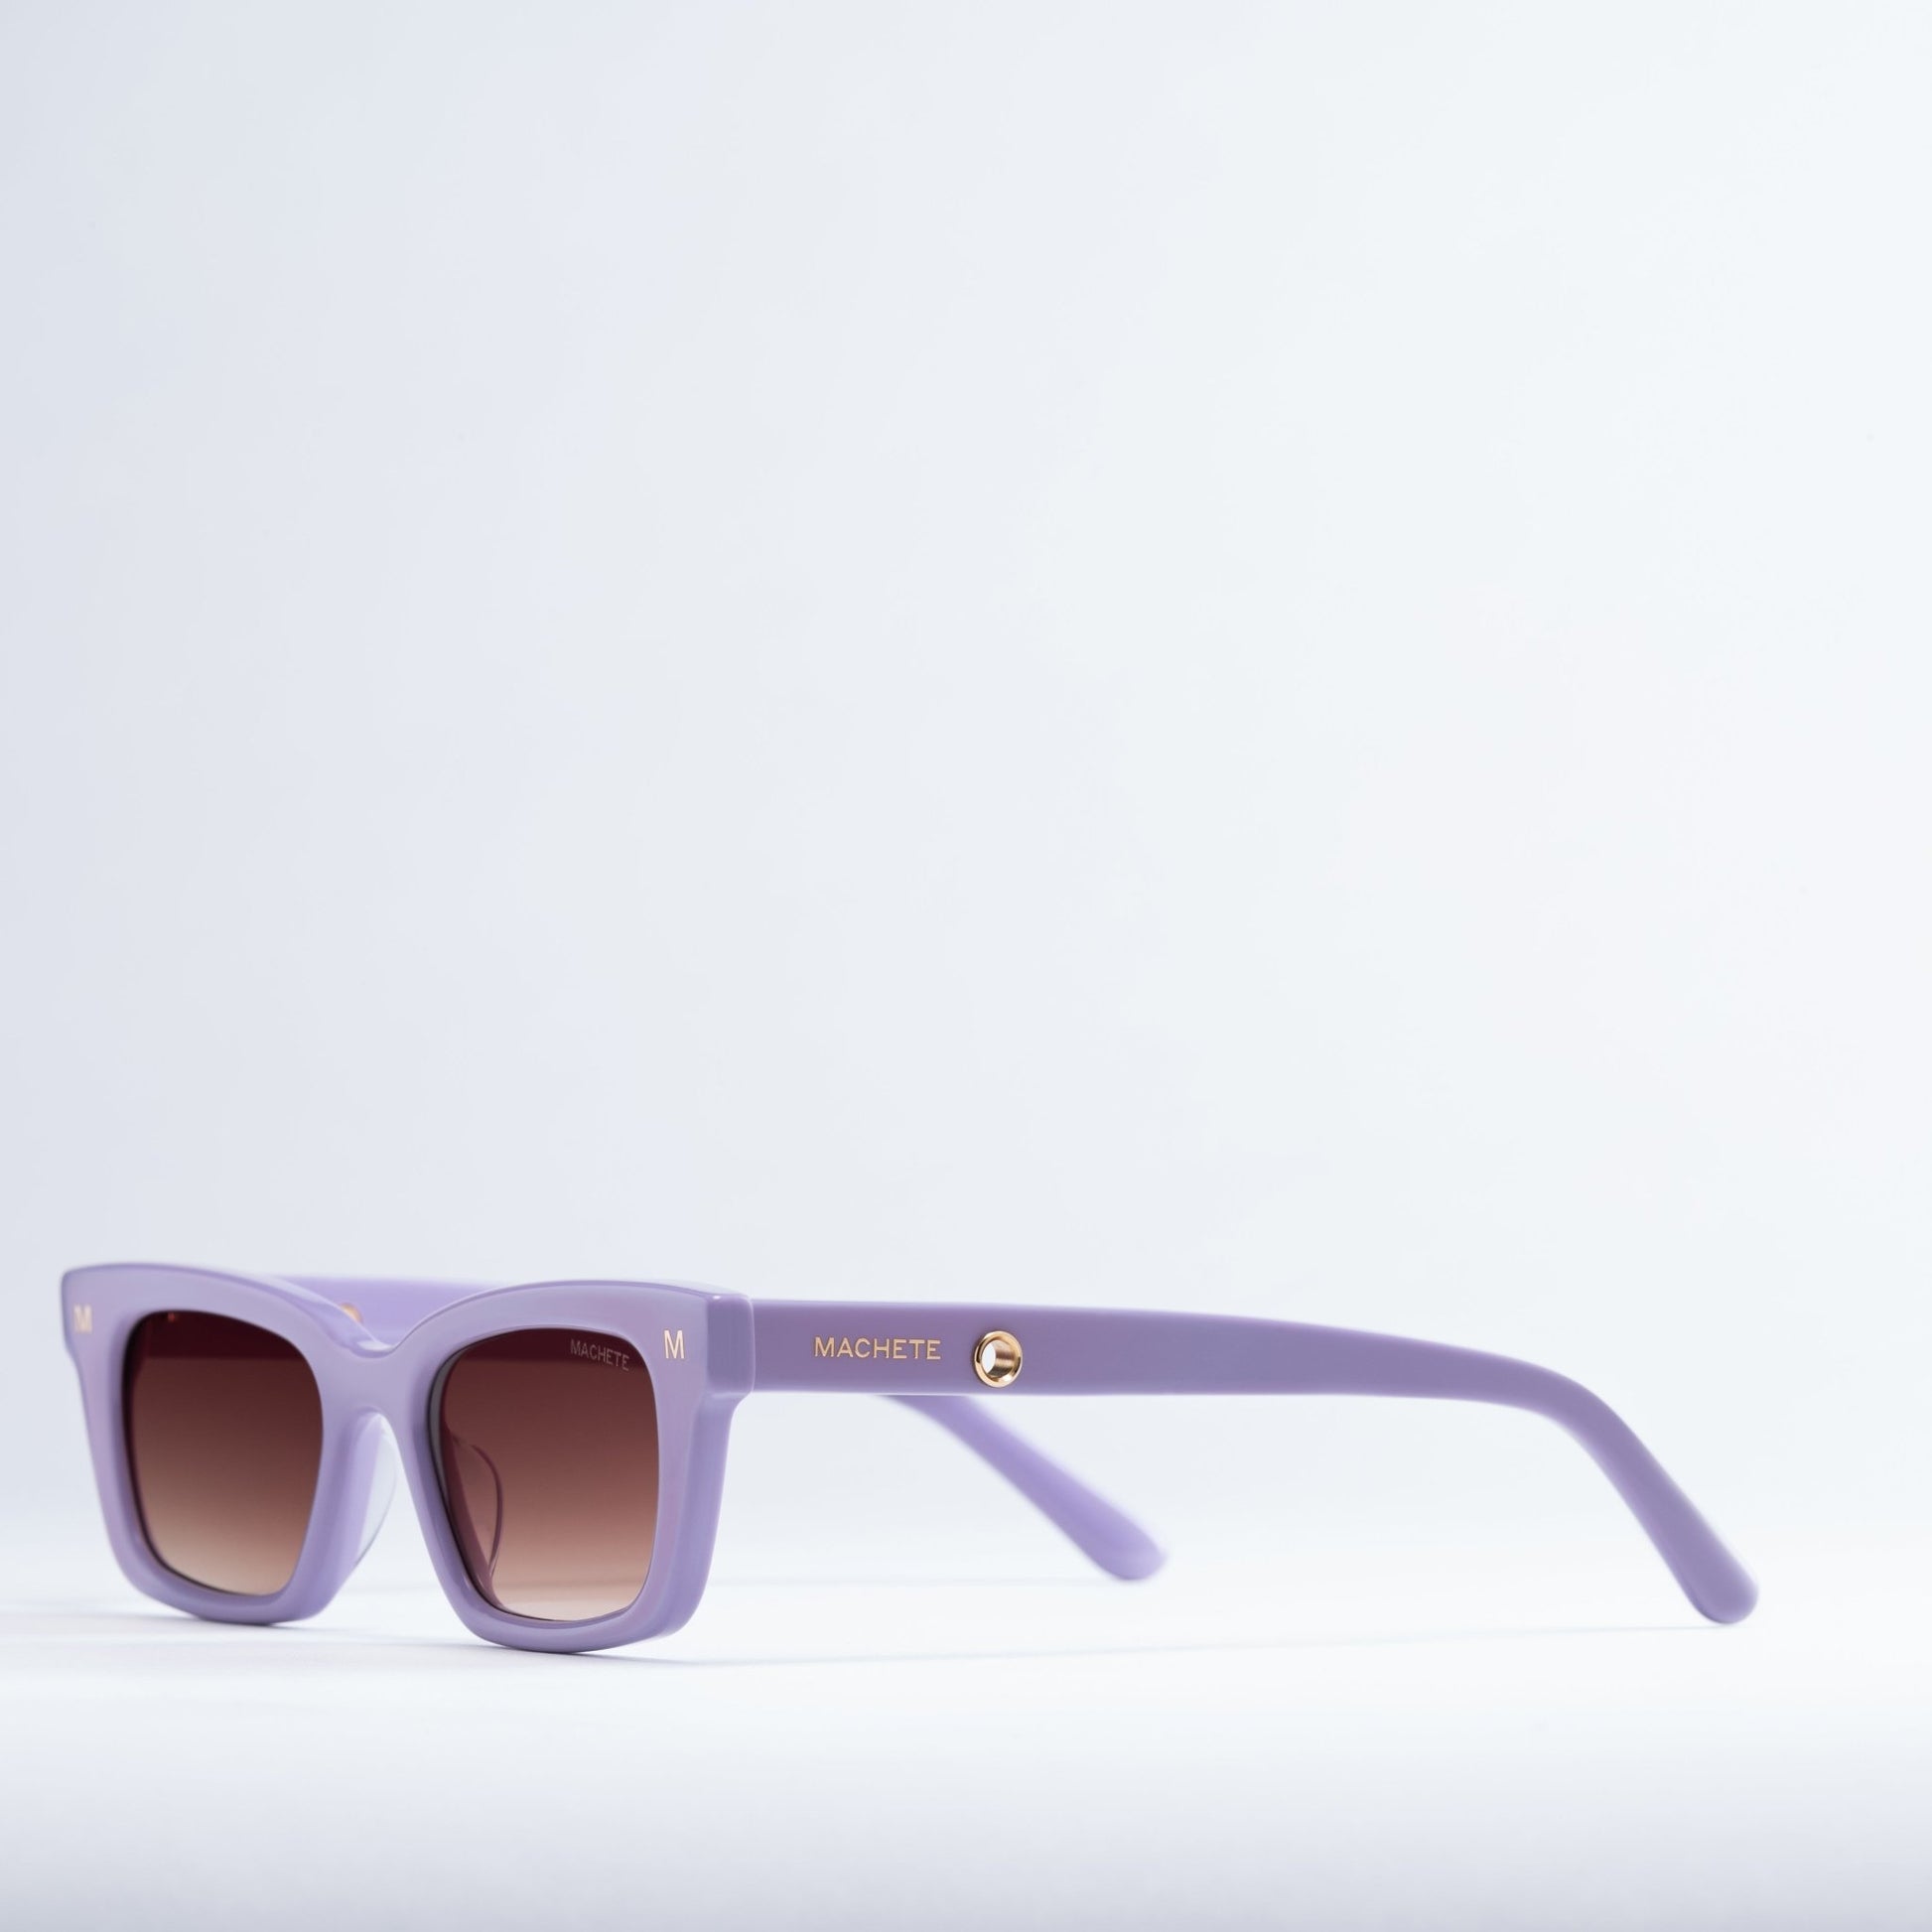 MACHETE Ruby Sunglasses in Violet